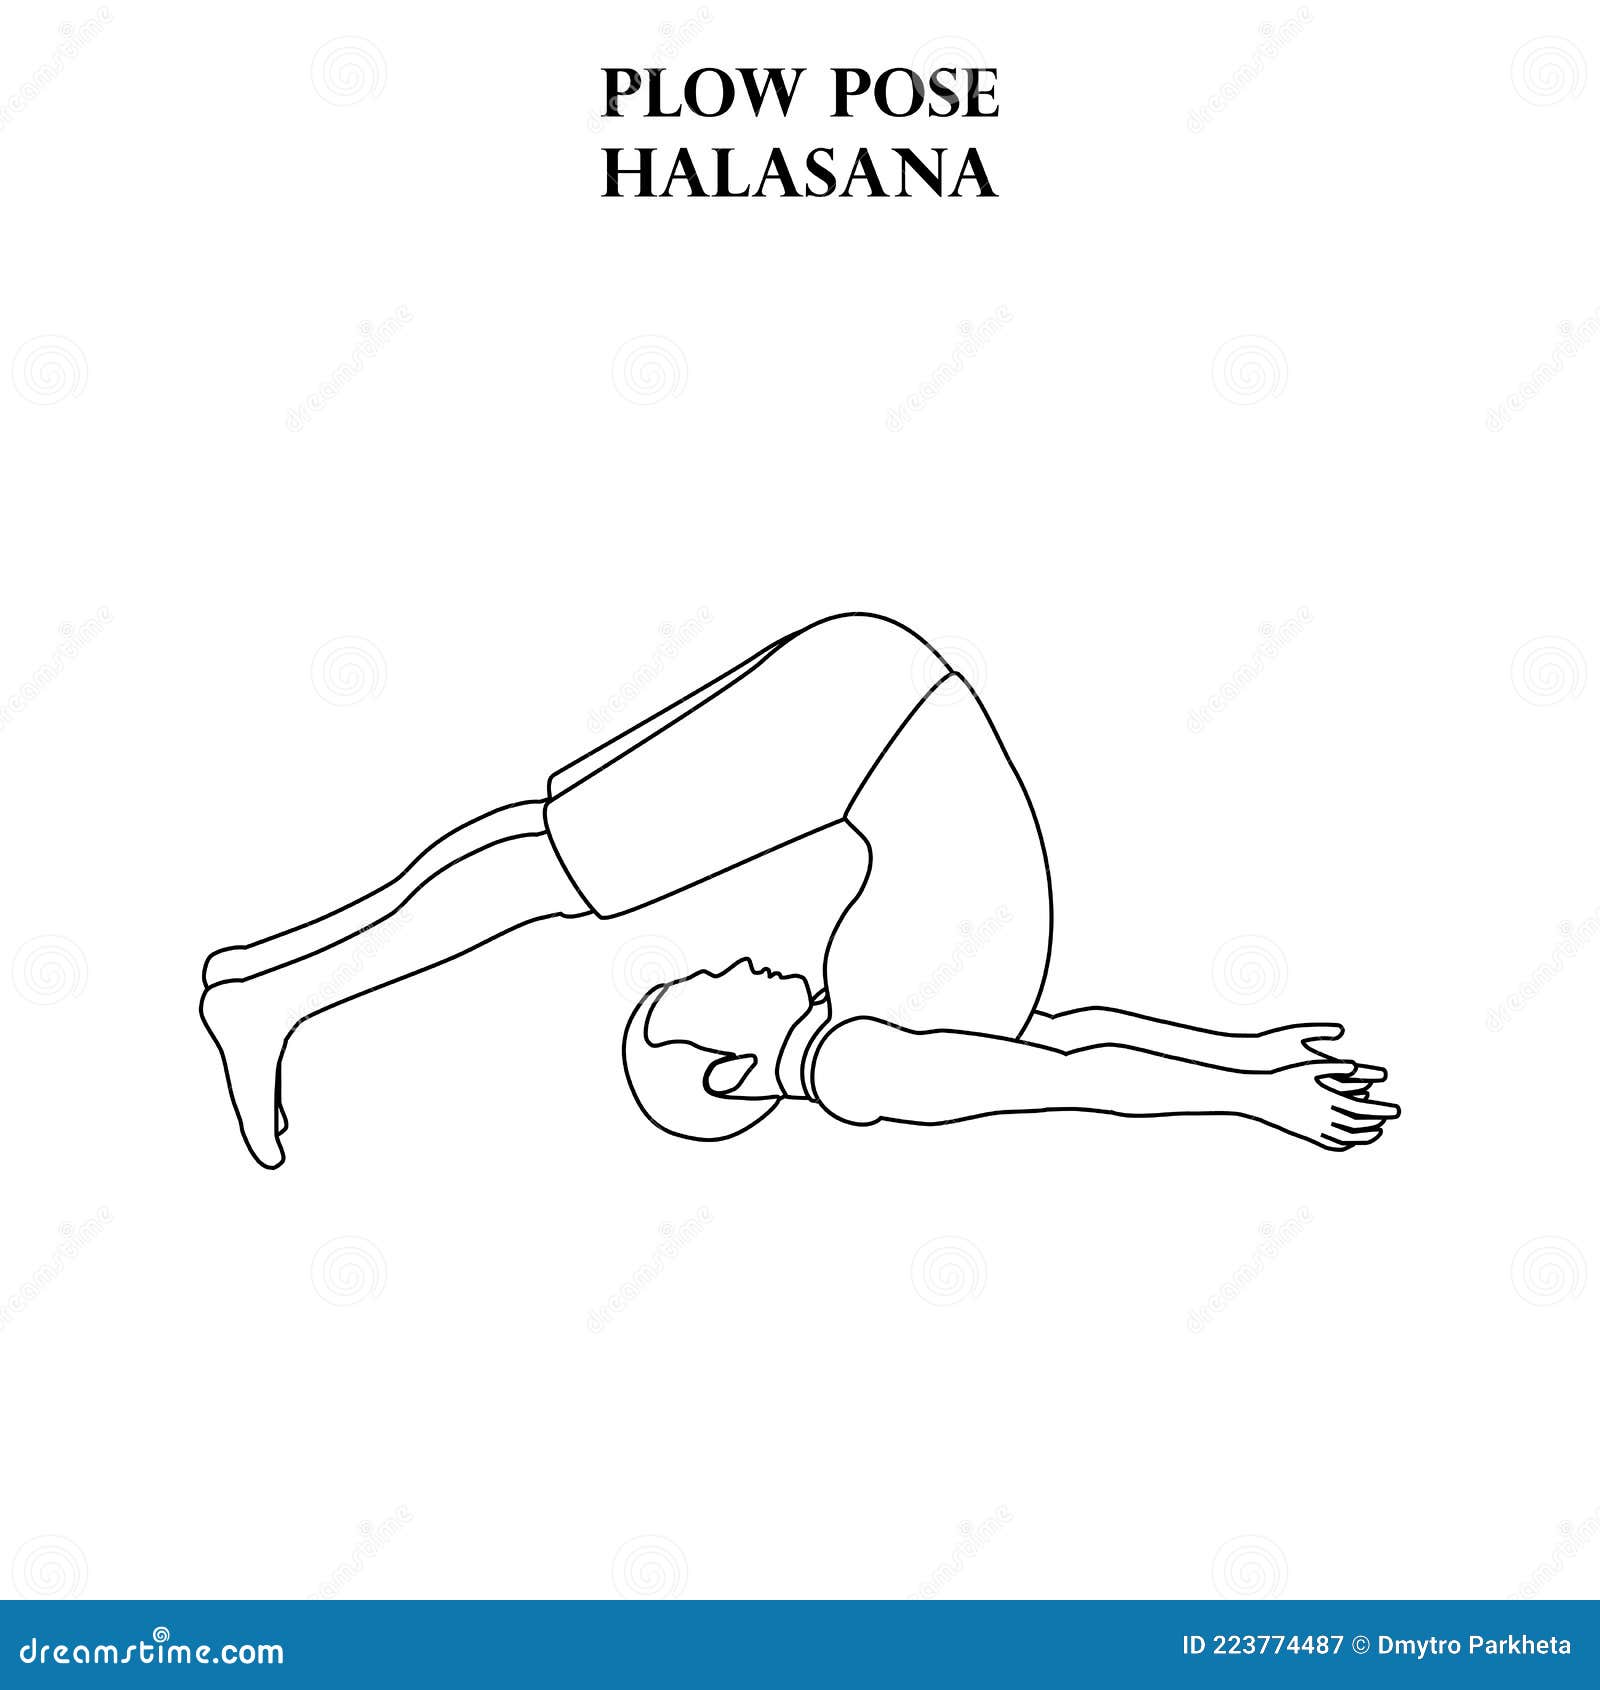 Yoga plow pose or halasana woman silhouette Vector Image